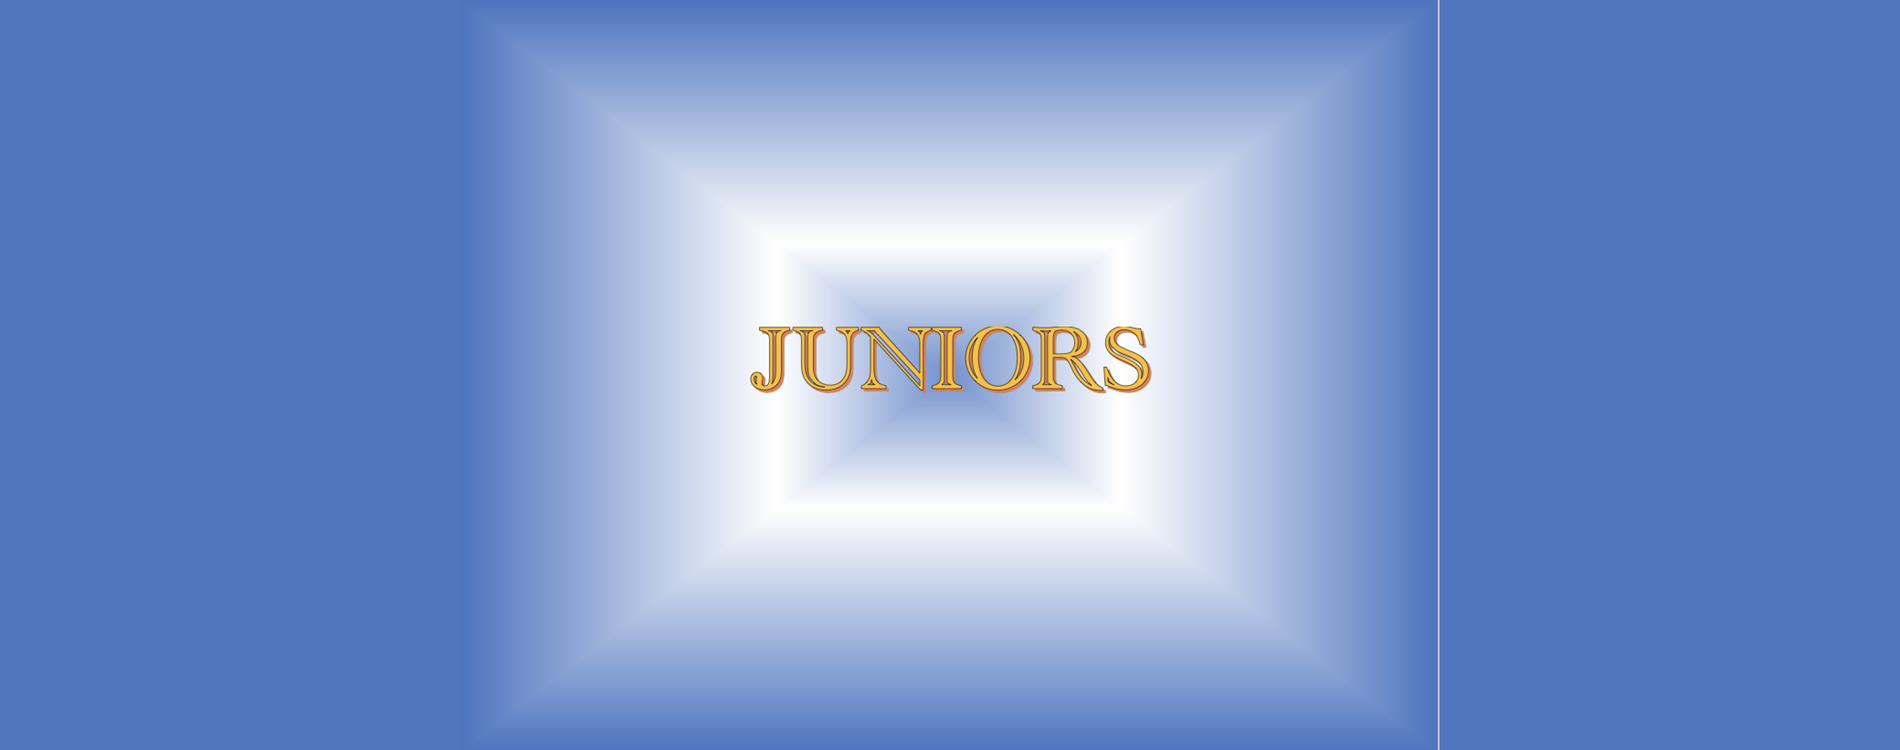 Juniors banner